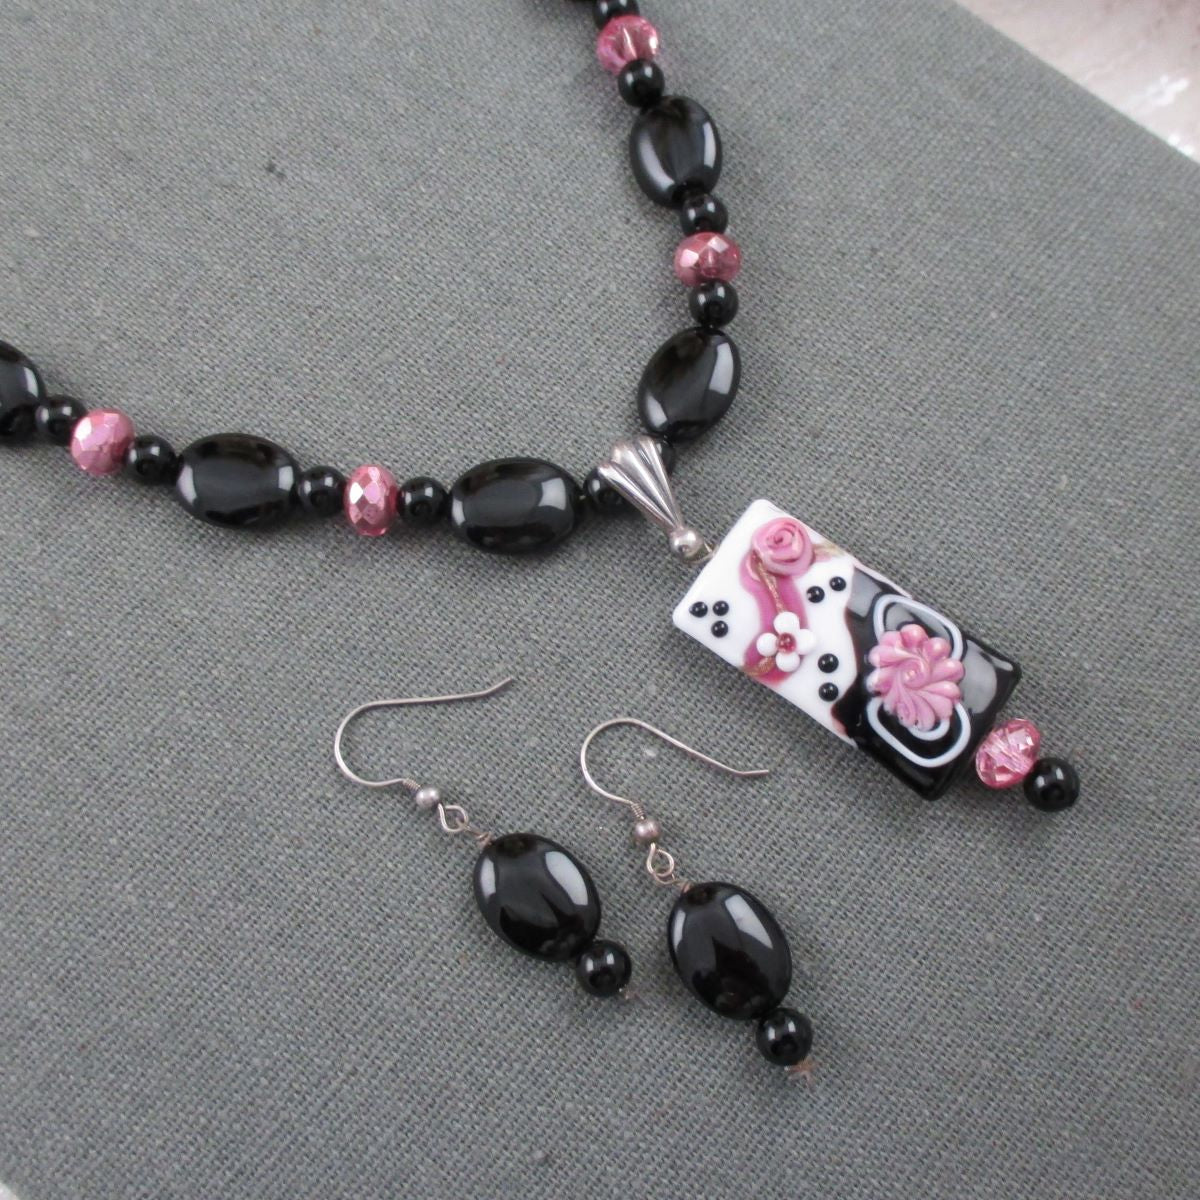 Onyx Necklace with Handmade Black & Pink Pendant - VP's Jewelry